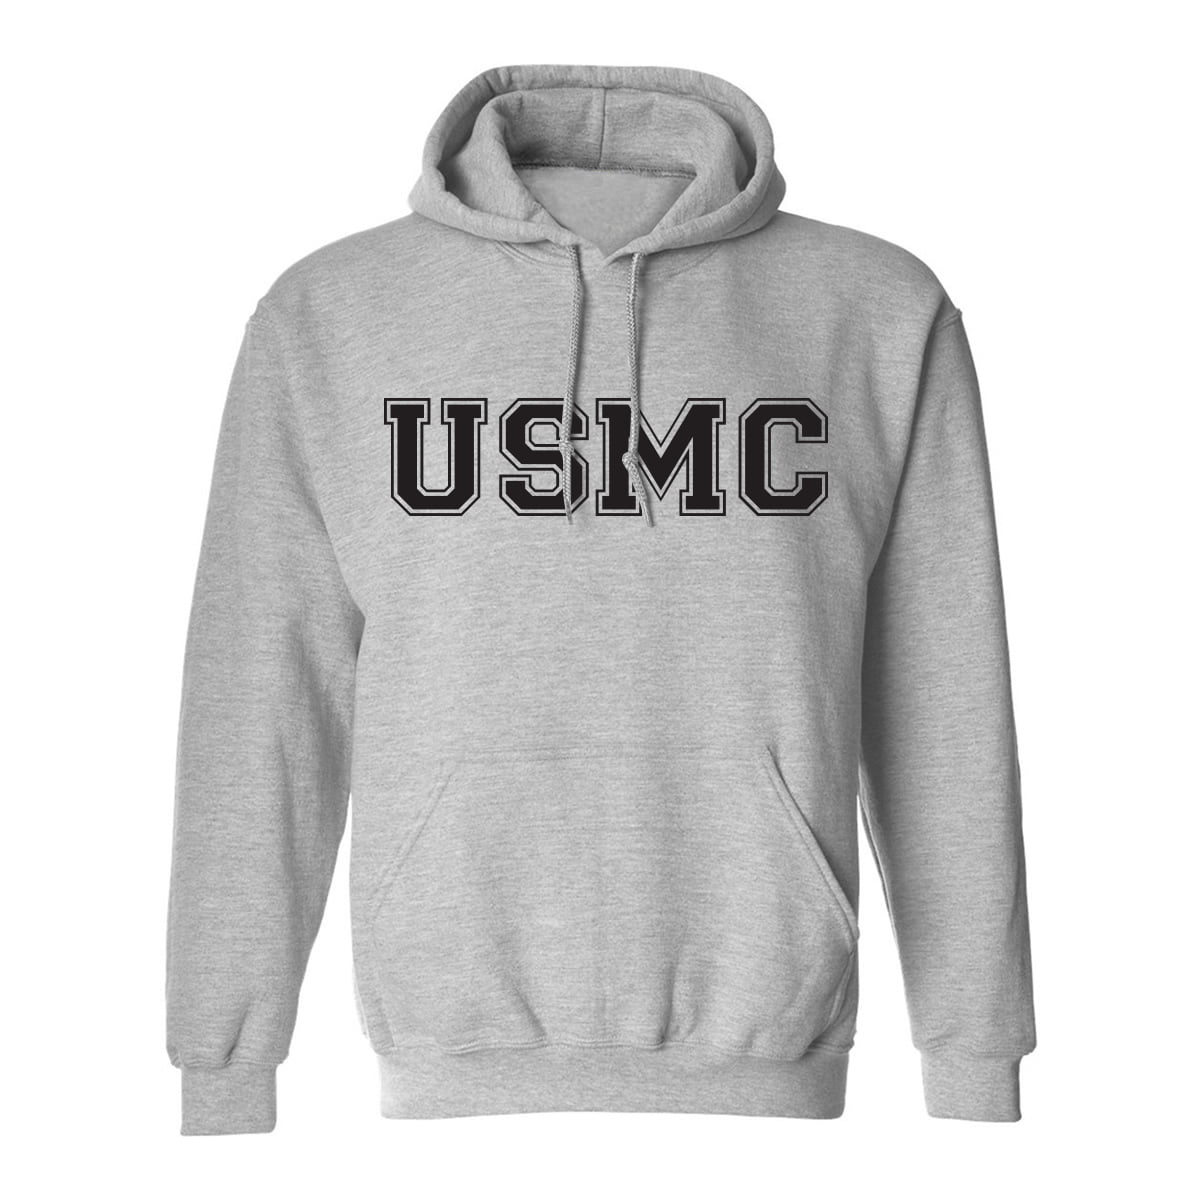 USMC Athletic Marines Hooded Sweatshirt in Gray